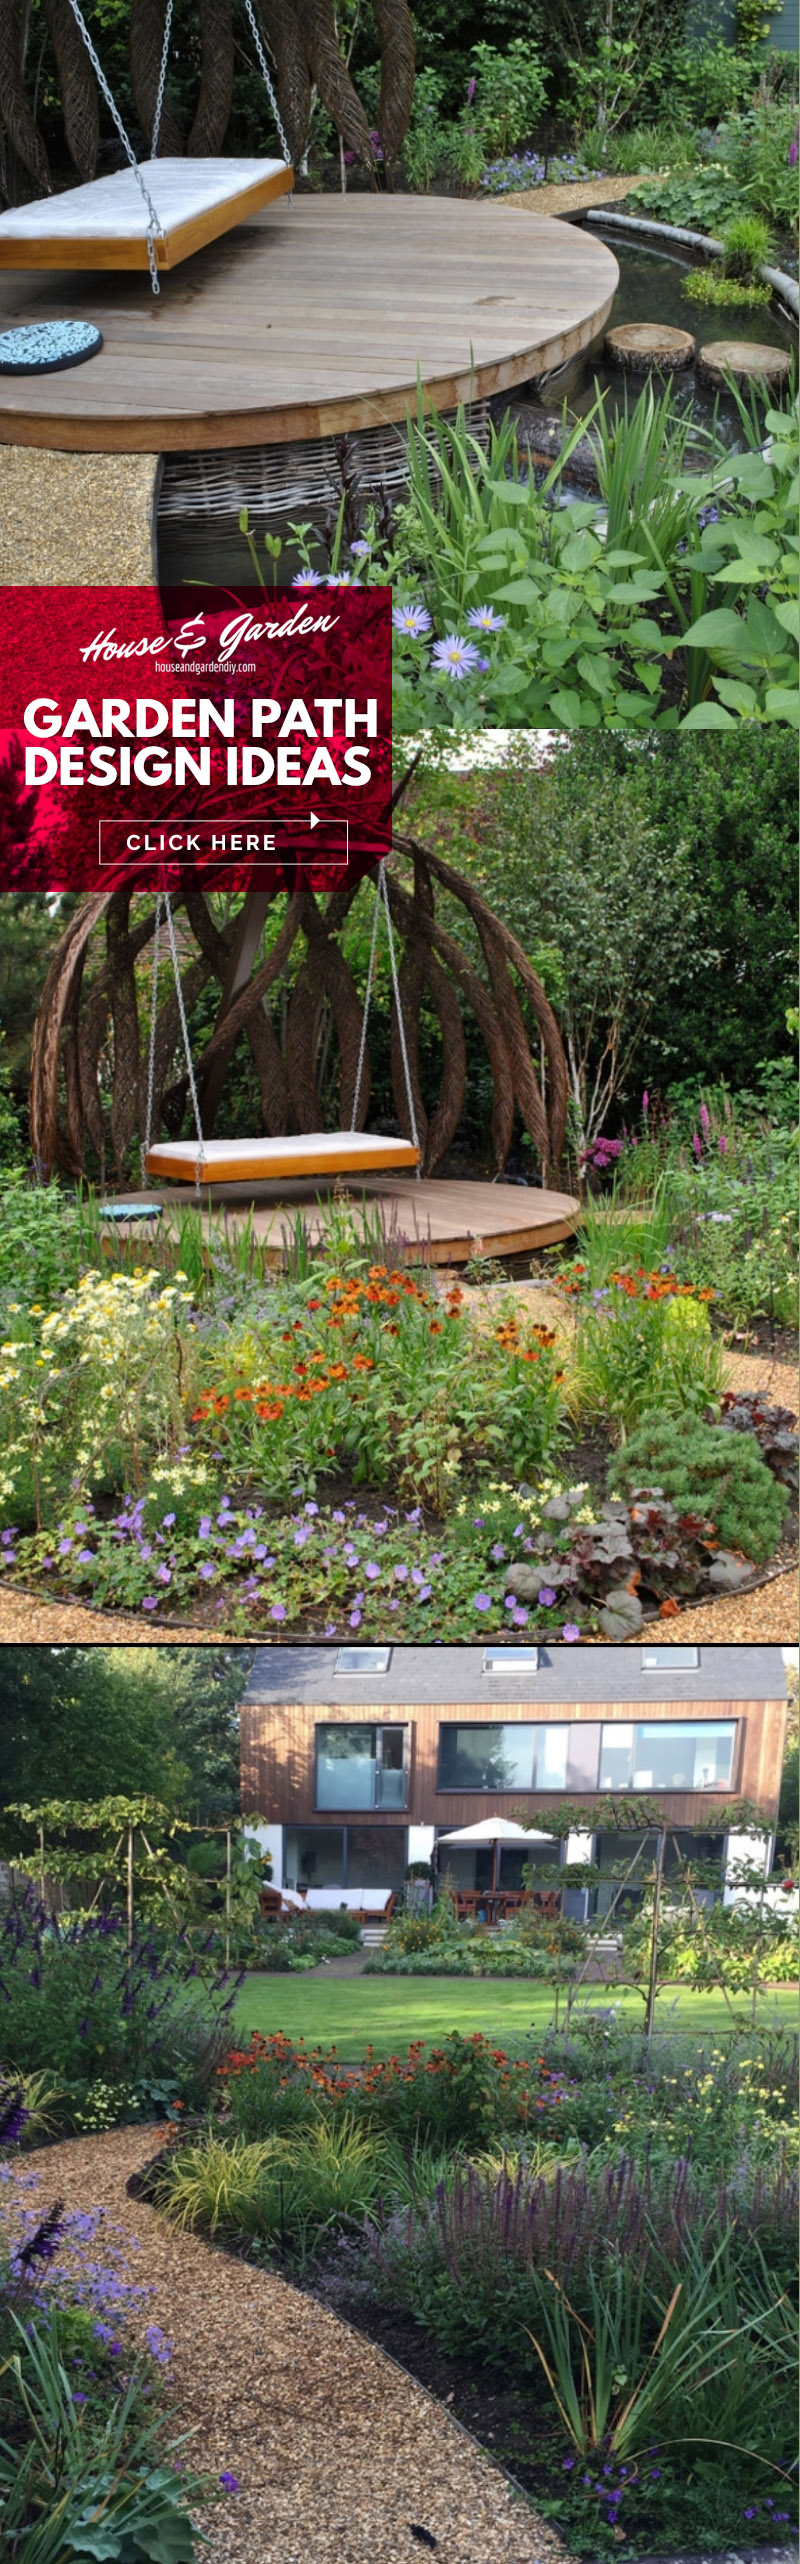 garden path ideas uk